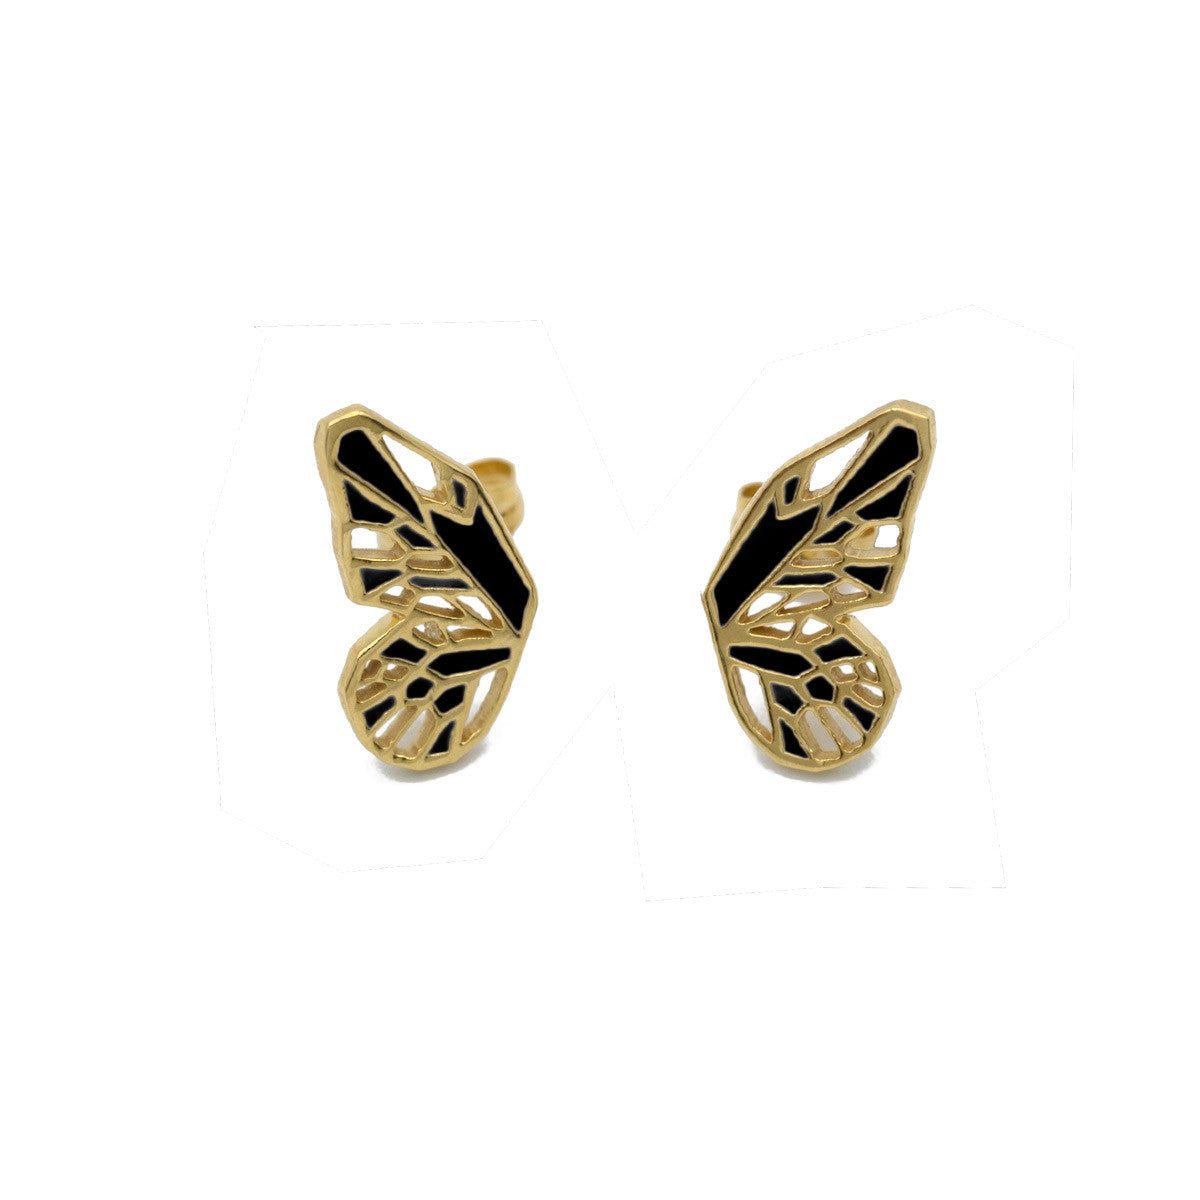 Butterfly wings earring posts in gold vermeil and black enamel